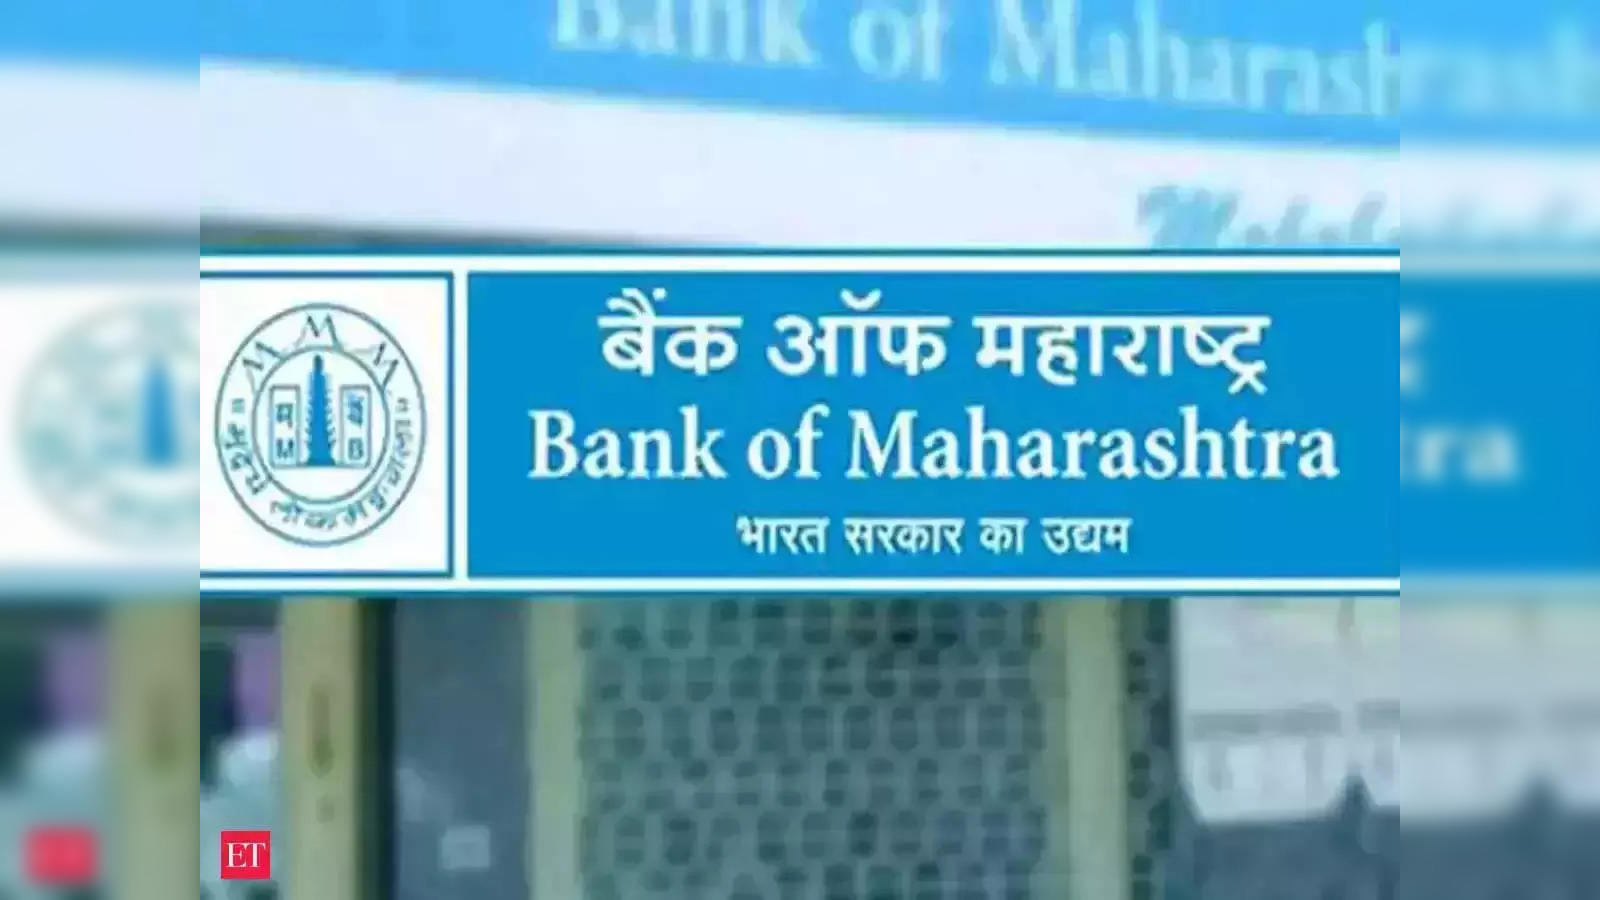 Bank of Maharashtra on X: 